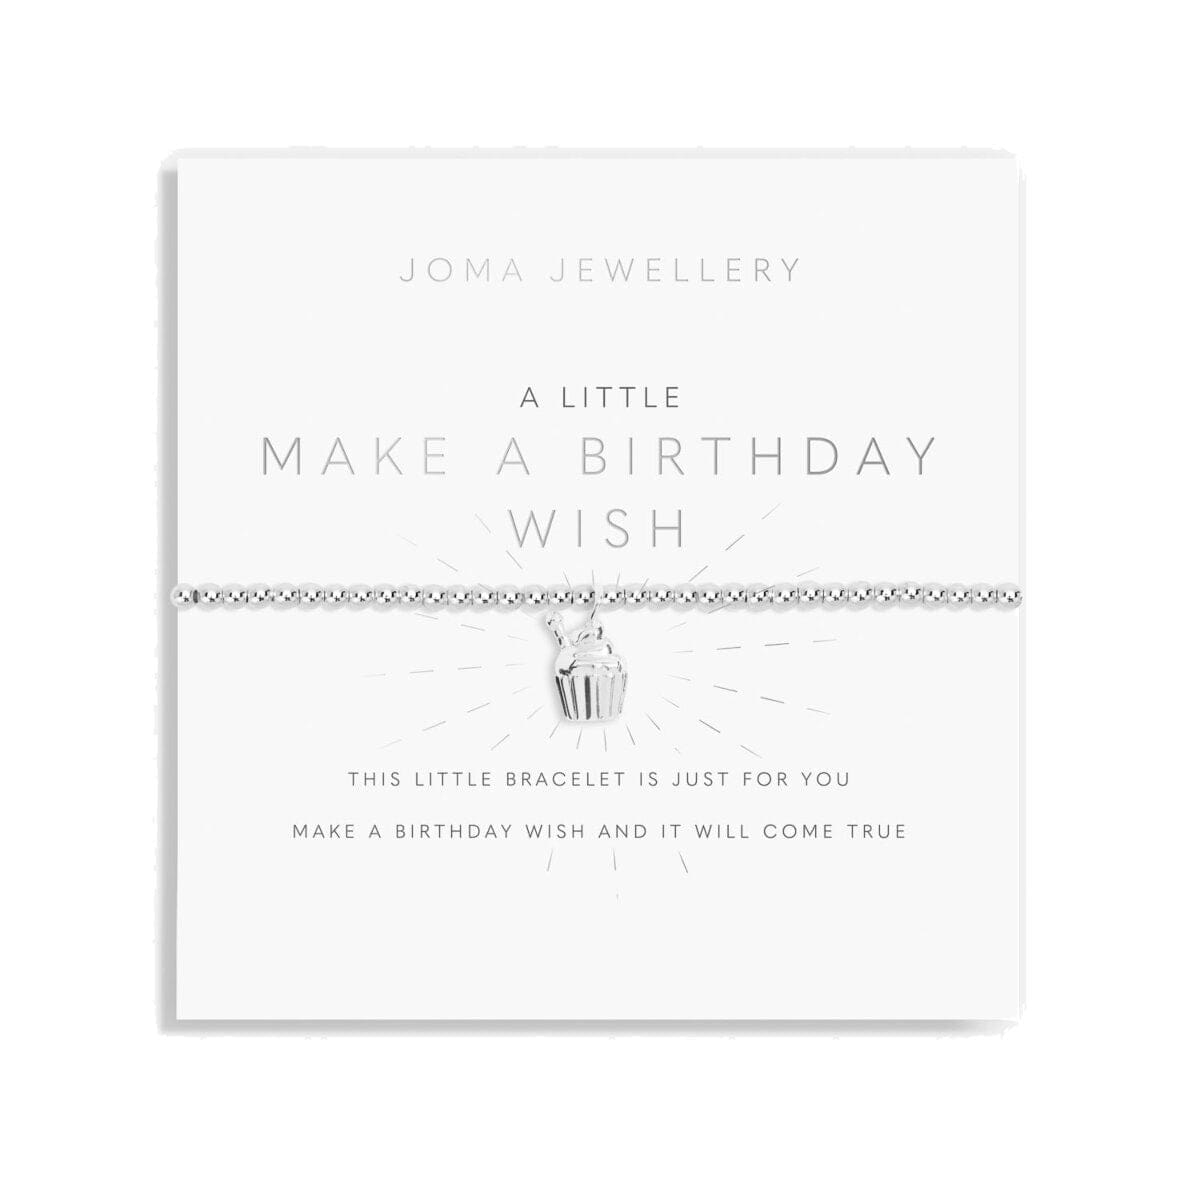 Joma Jewellery Childrens Bracelet Joma Jewellery Children's Bracelet - A Little Make A Birthday Wish